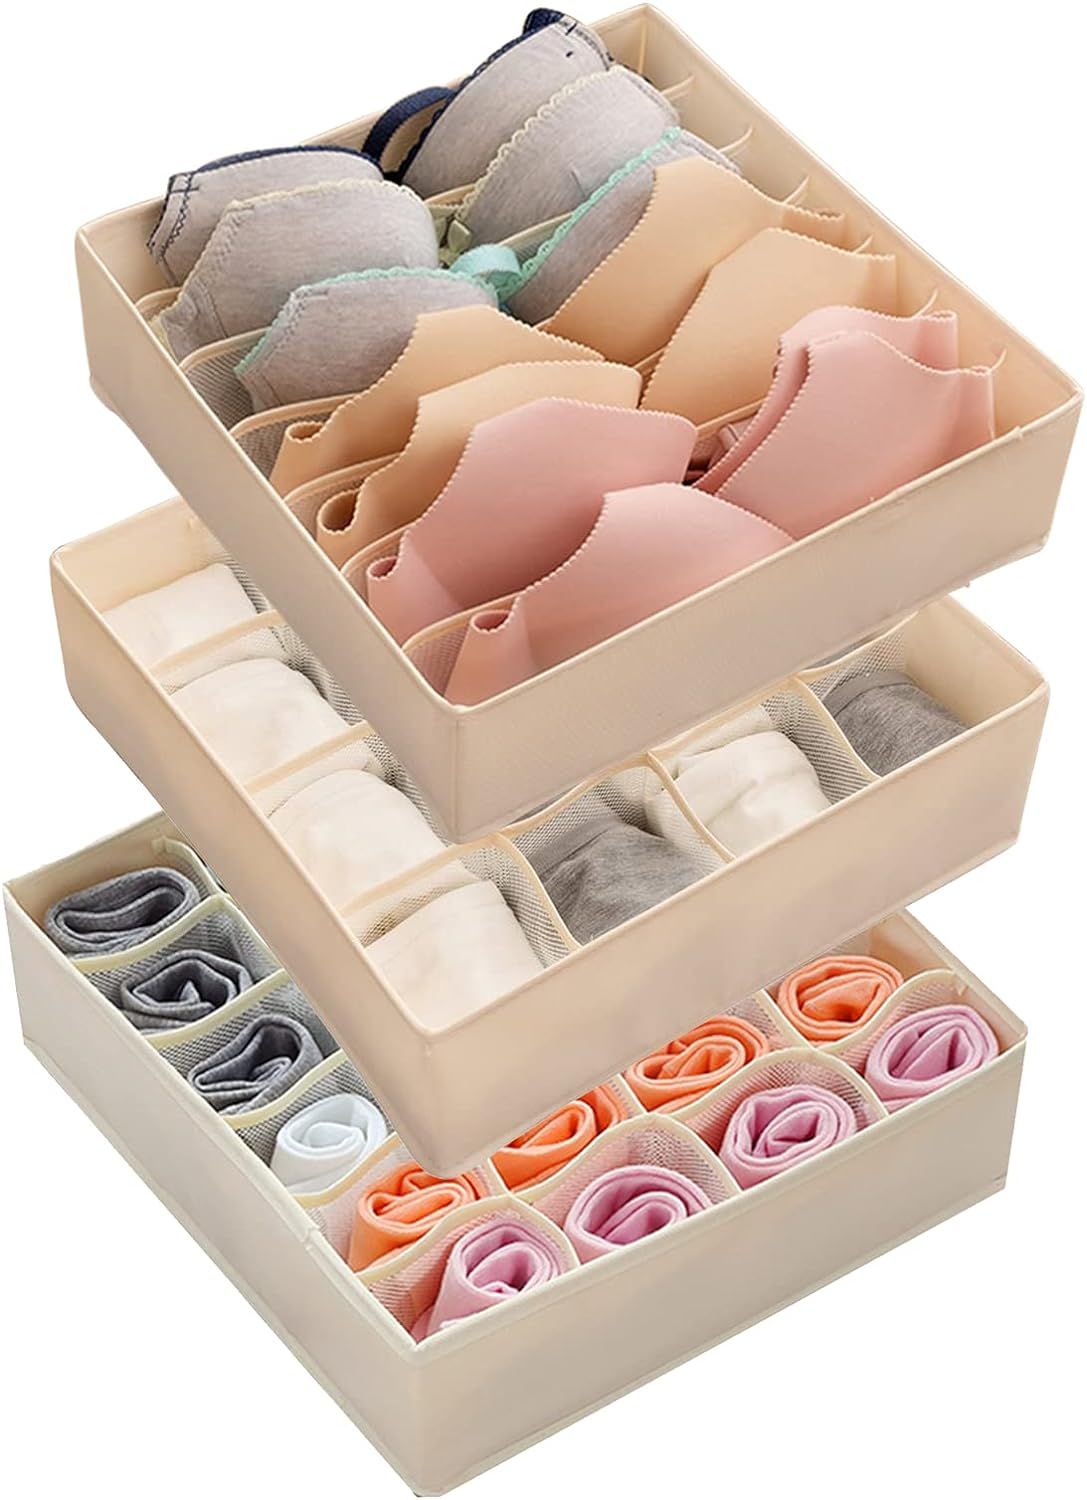 STYLIFING Bra Socks Underwear Organizer 3 Pack, Foldable Closet Organizer Drawer Soft Fabric Dres... | Amazon (US)